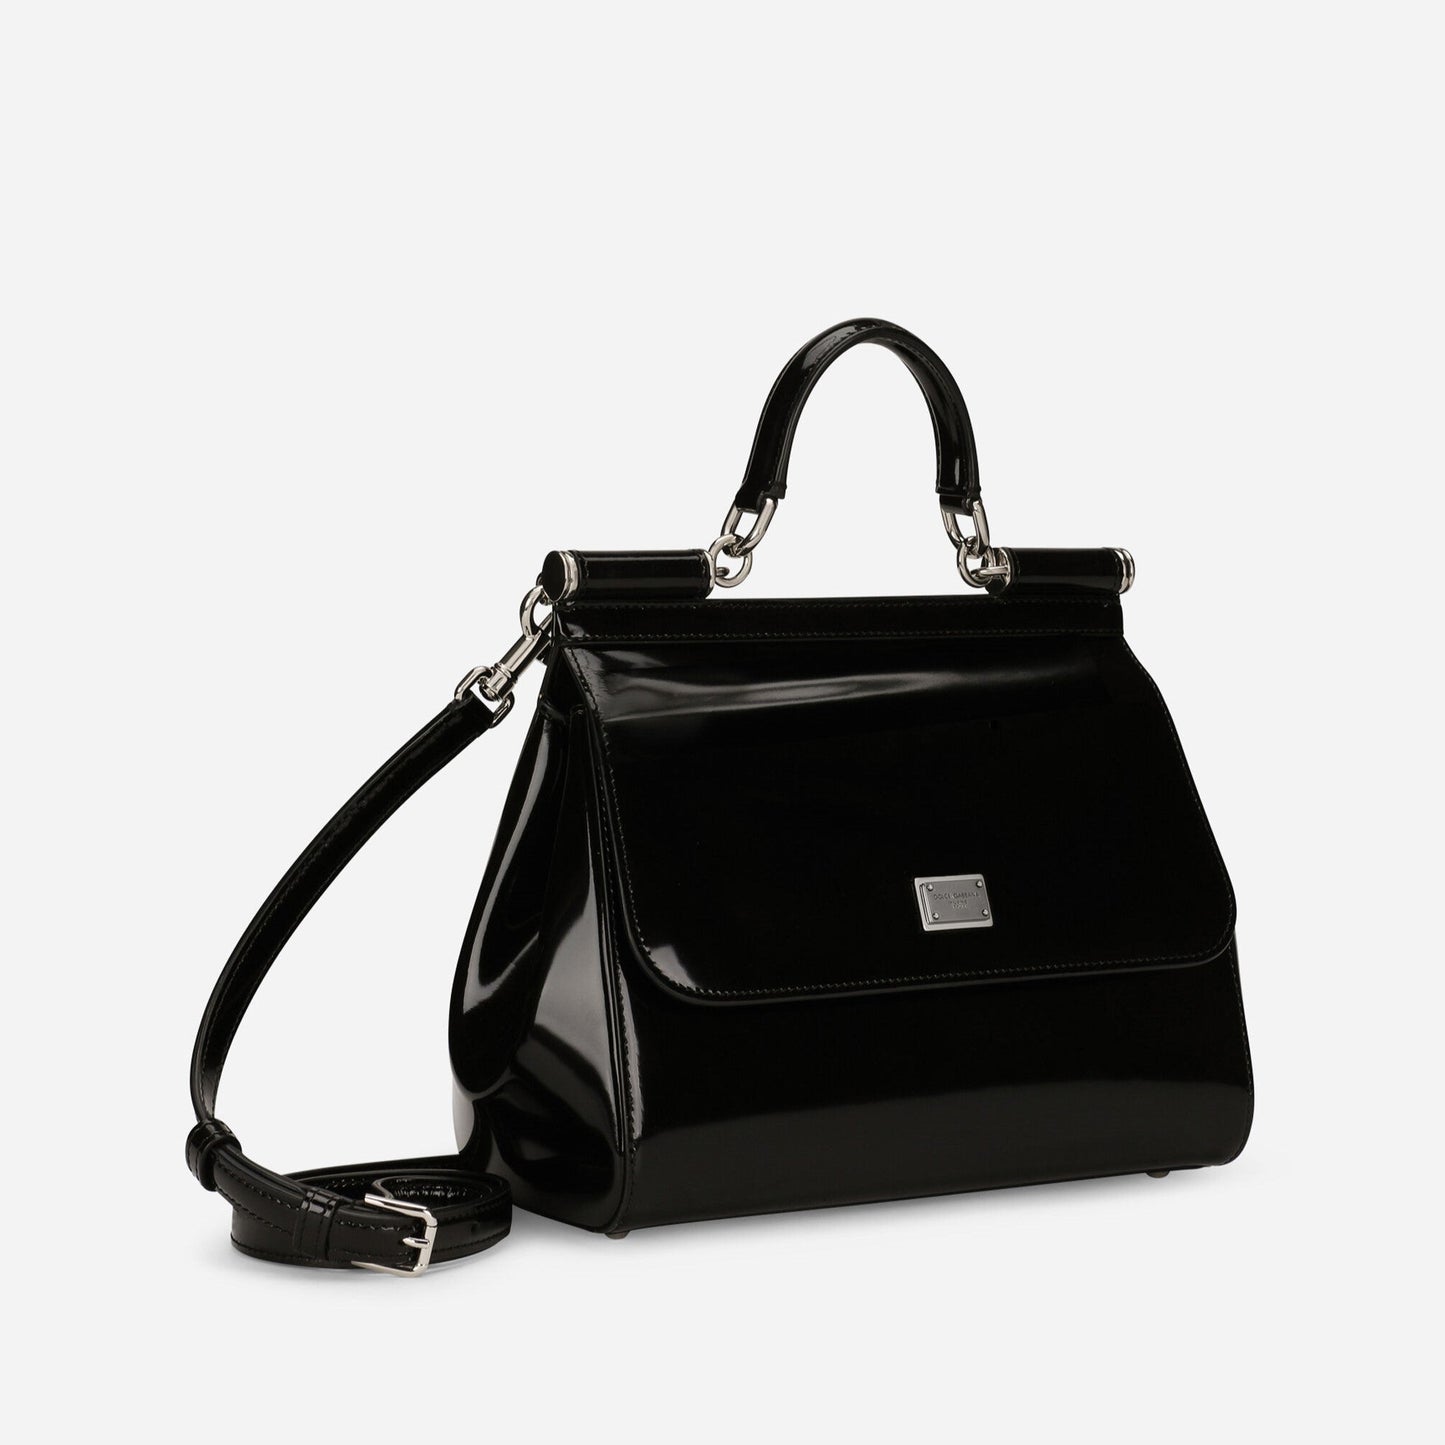 KIM D&G Sicily Large Handbag in Glossy Black/Silver Handbags DOLCE & GABBANA - LOLAMIR